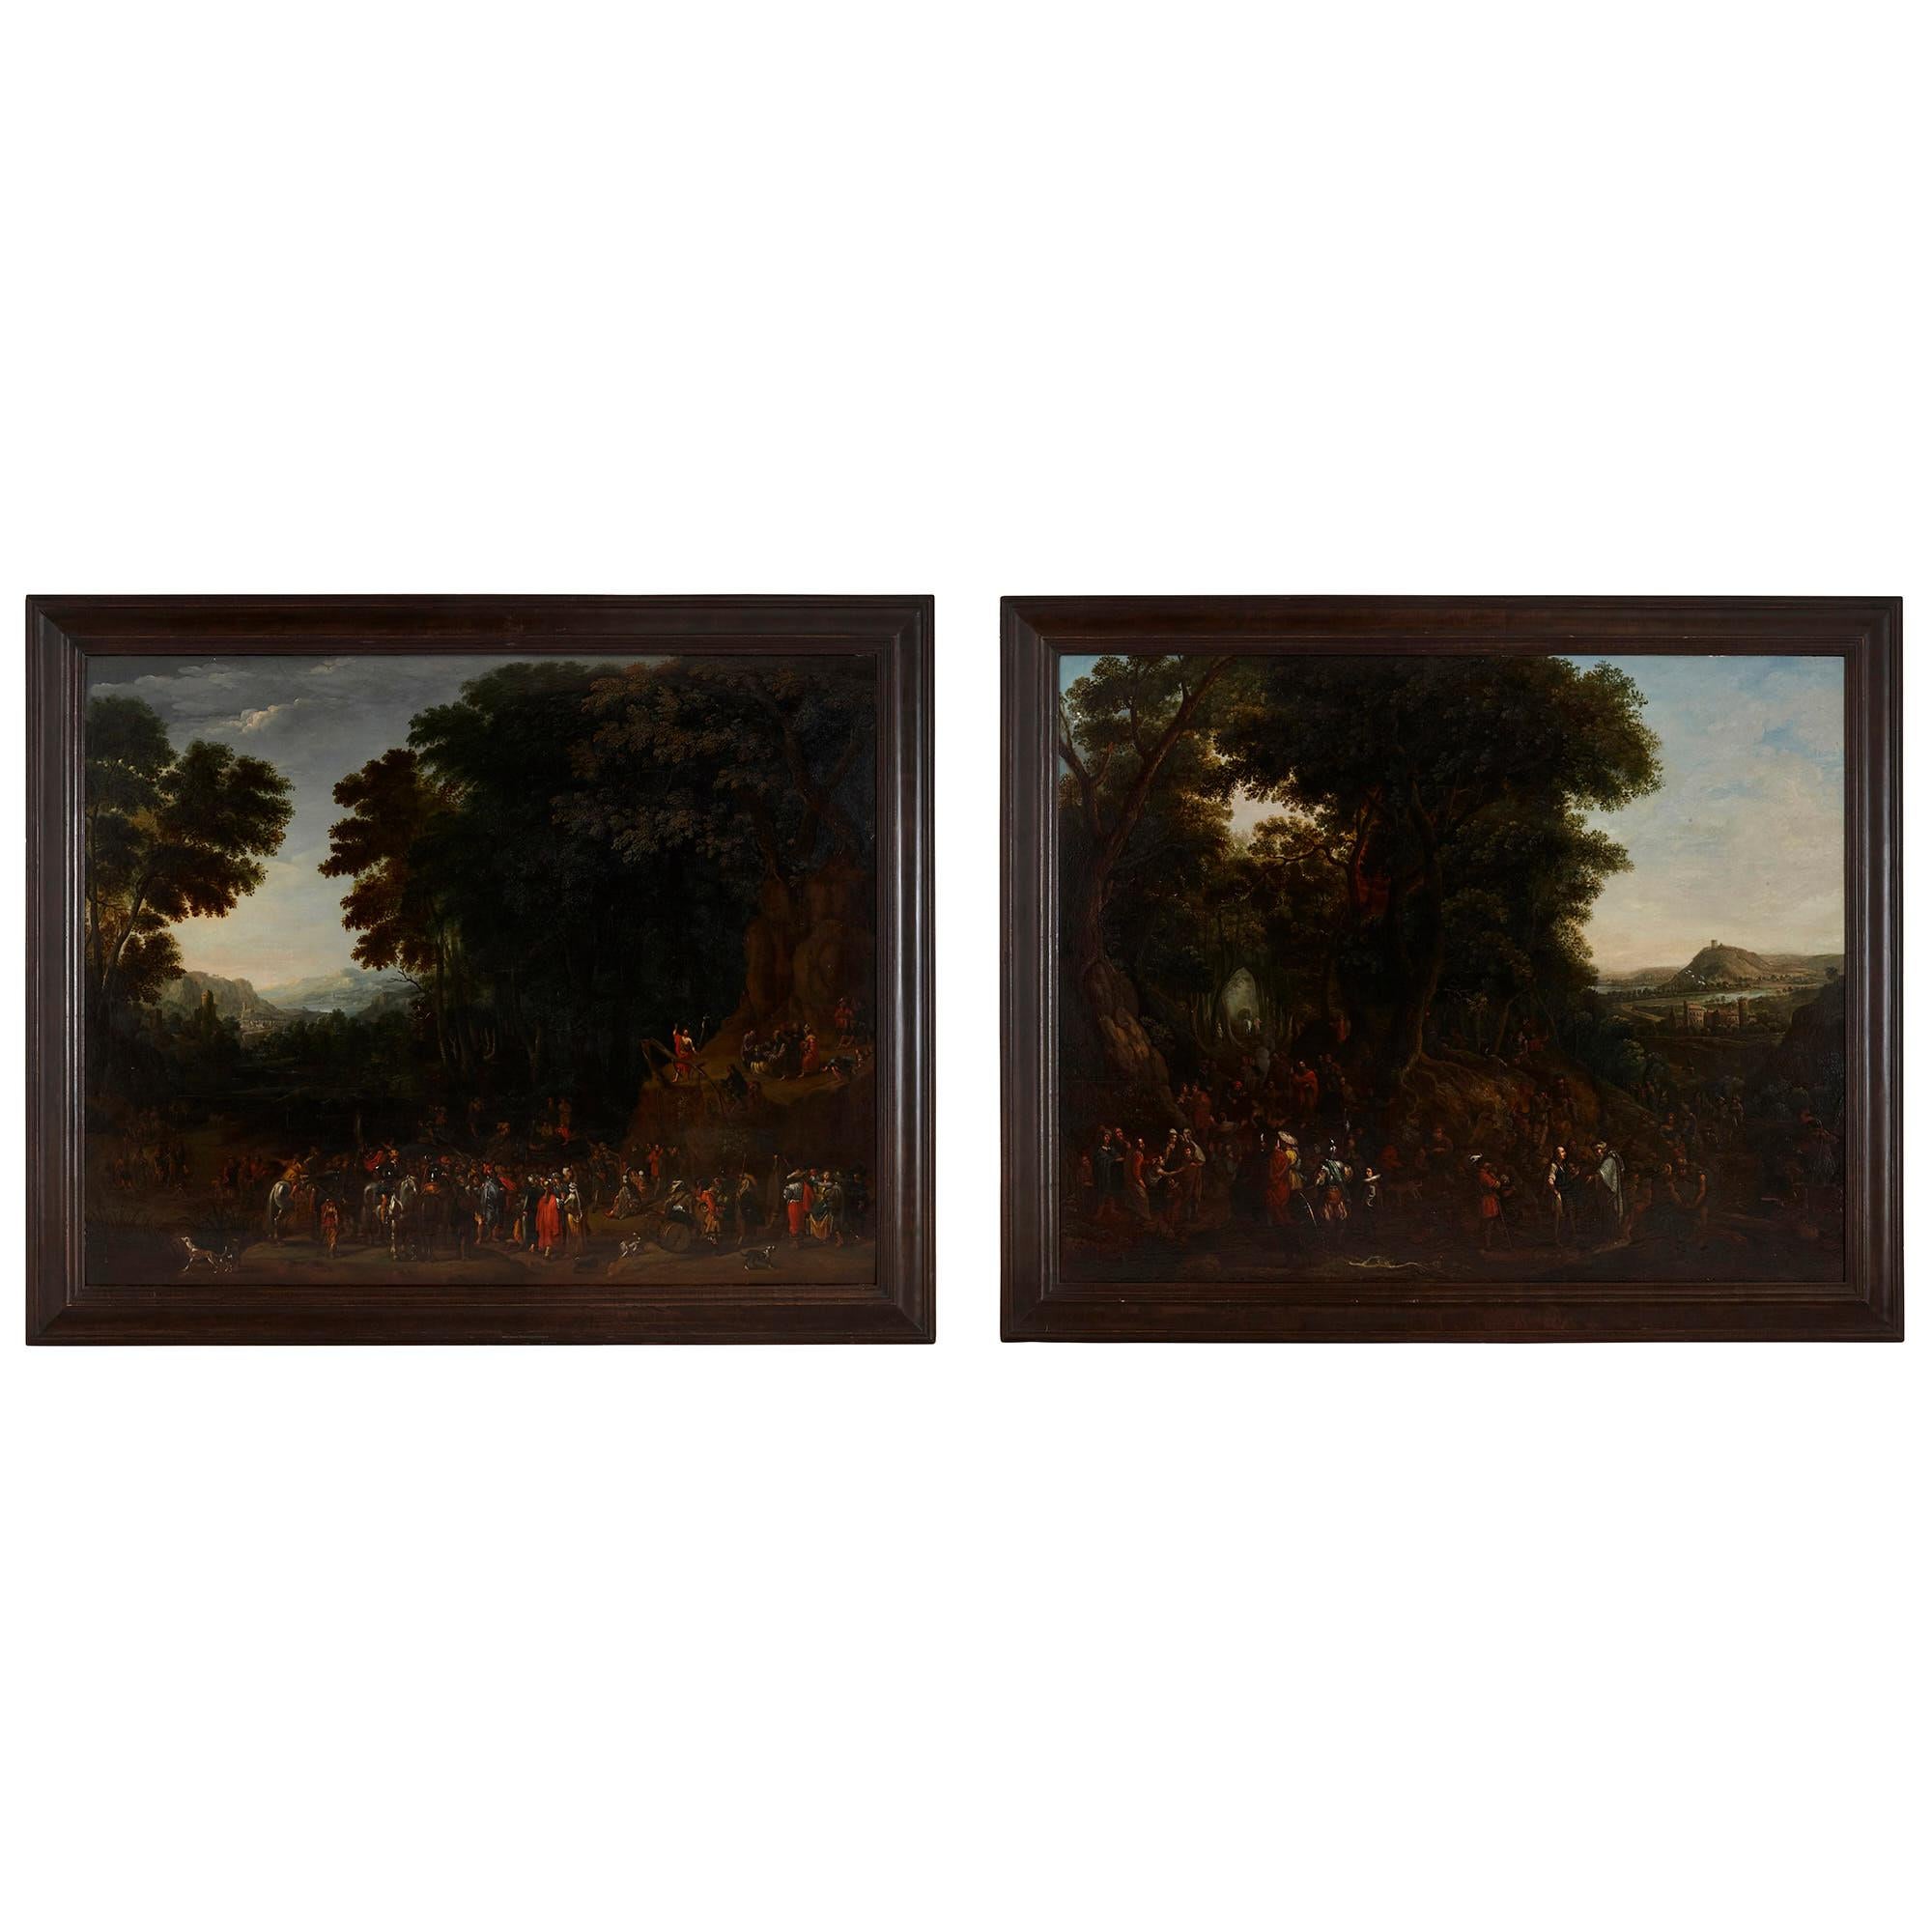 Two oil on panel Old Master landscape paintings by Johannes Jakob Hartmann